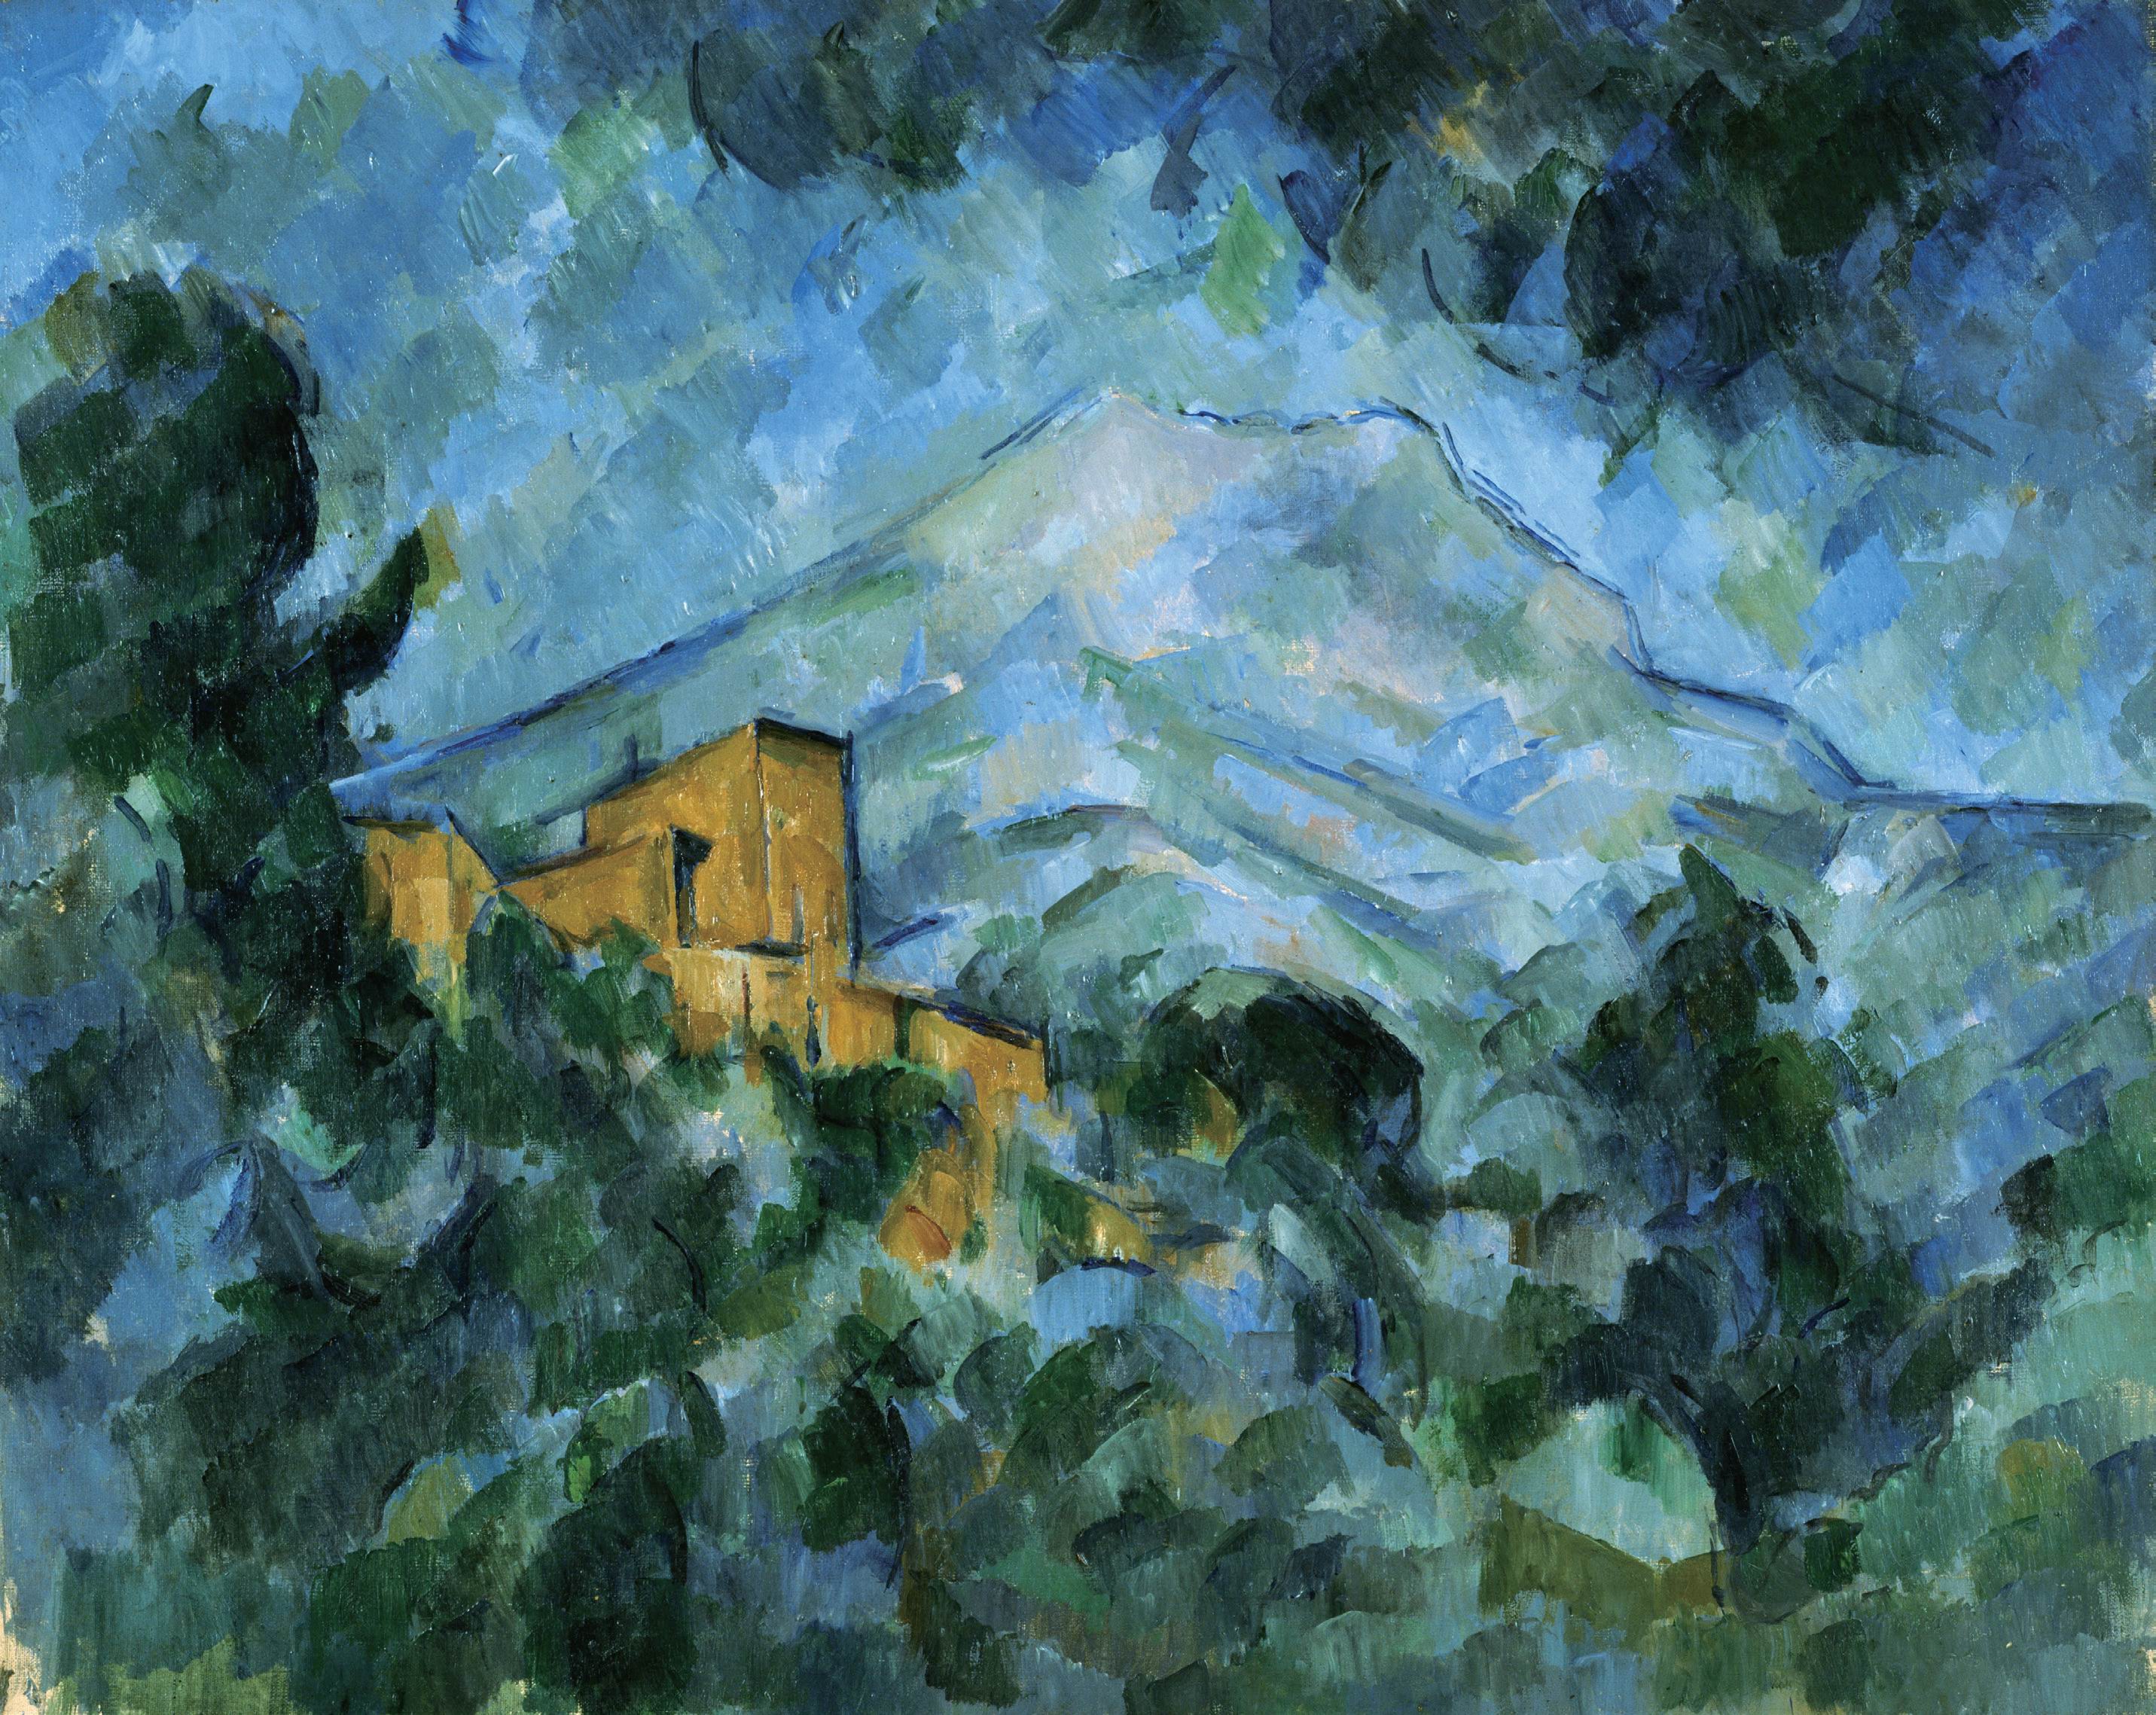 Oil Painting Oil On Canvas Paul Cezanne Artwork Classical Art 2863x2277